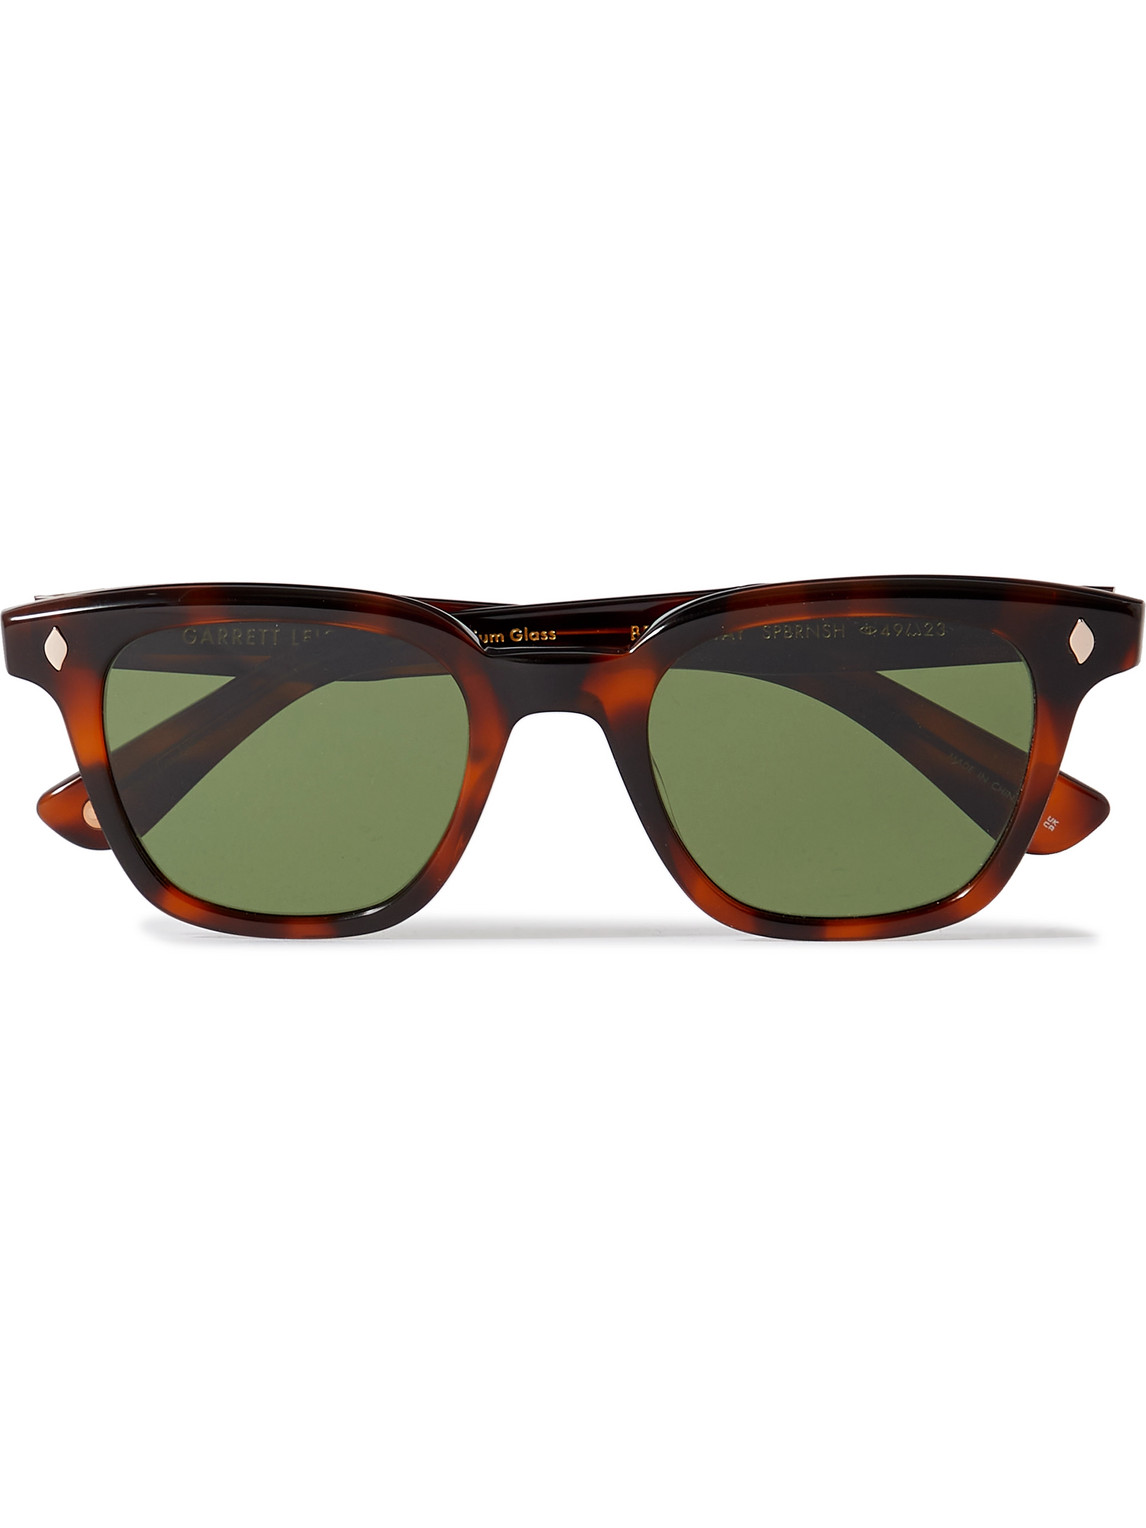 Garrett Leight California Optical Broadway D-frame Tortoiseshell Acetate Sunglasses